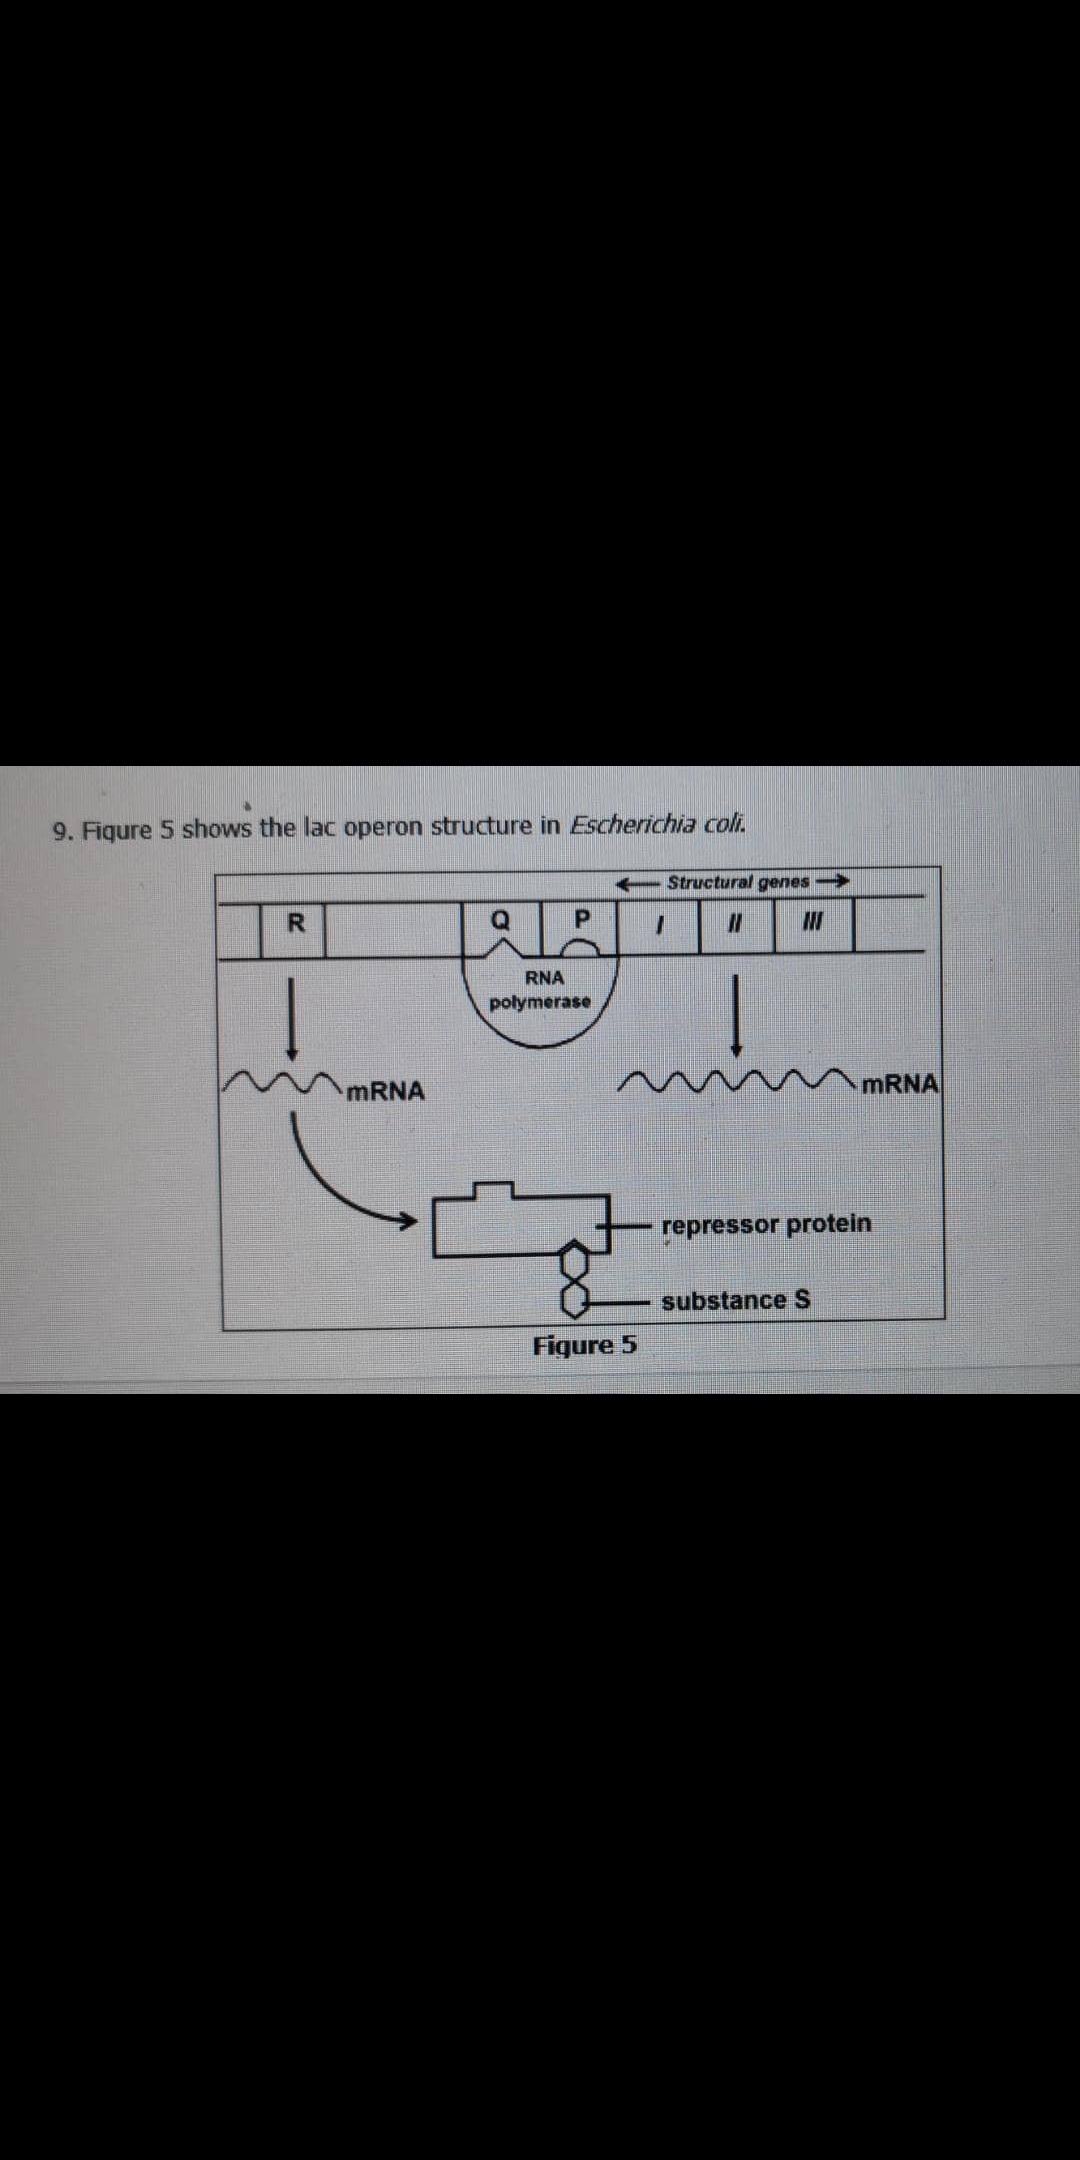 9. Figure 5 shows the lac operon structure in Escherichia coli.
Structural genes
R.
P.
RNA
polymerase
MRNA
MRNA
repressor protein
substance S
Figure 5
